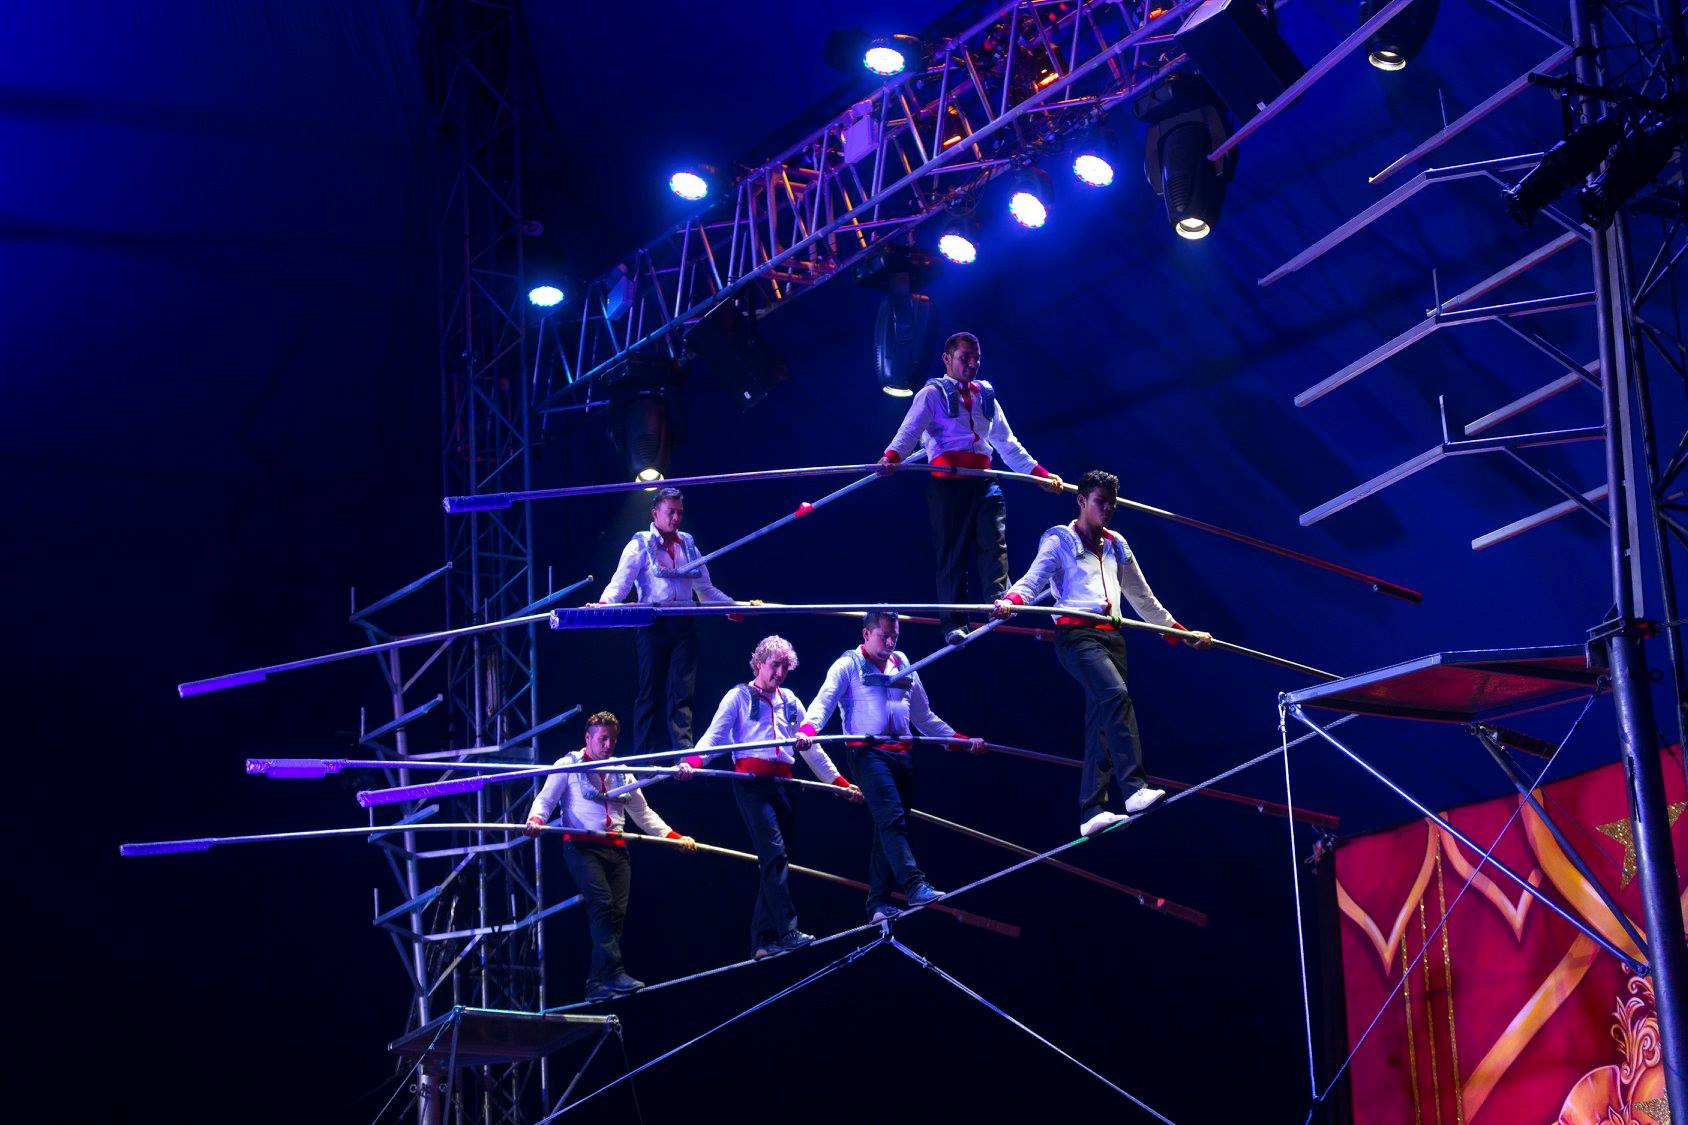 Hong-Kong-Events-Great-Circus-of-Europe.jpg